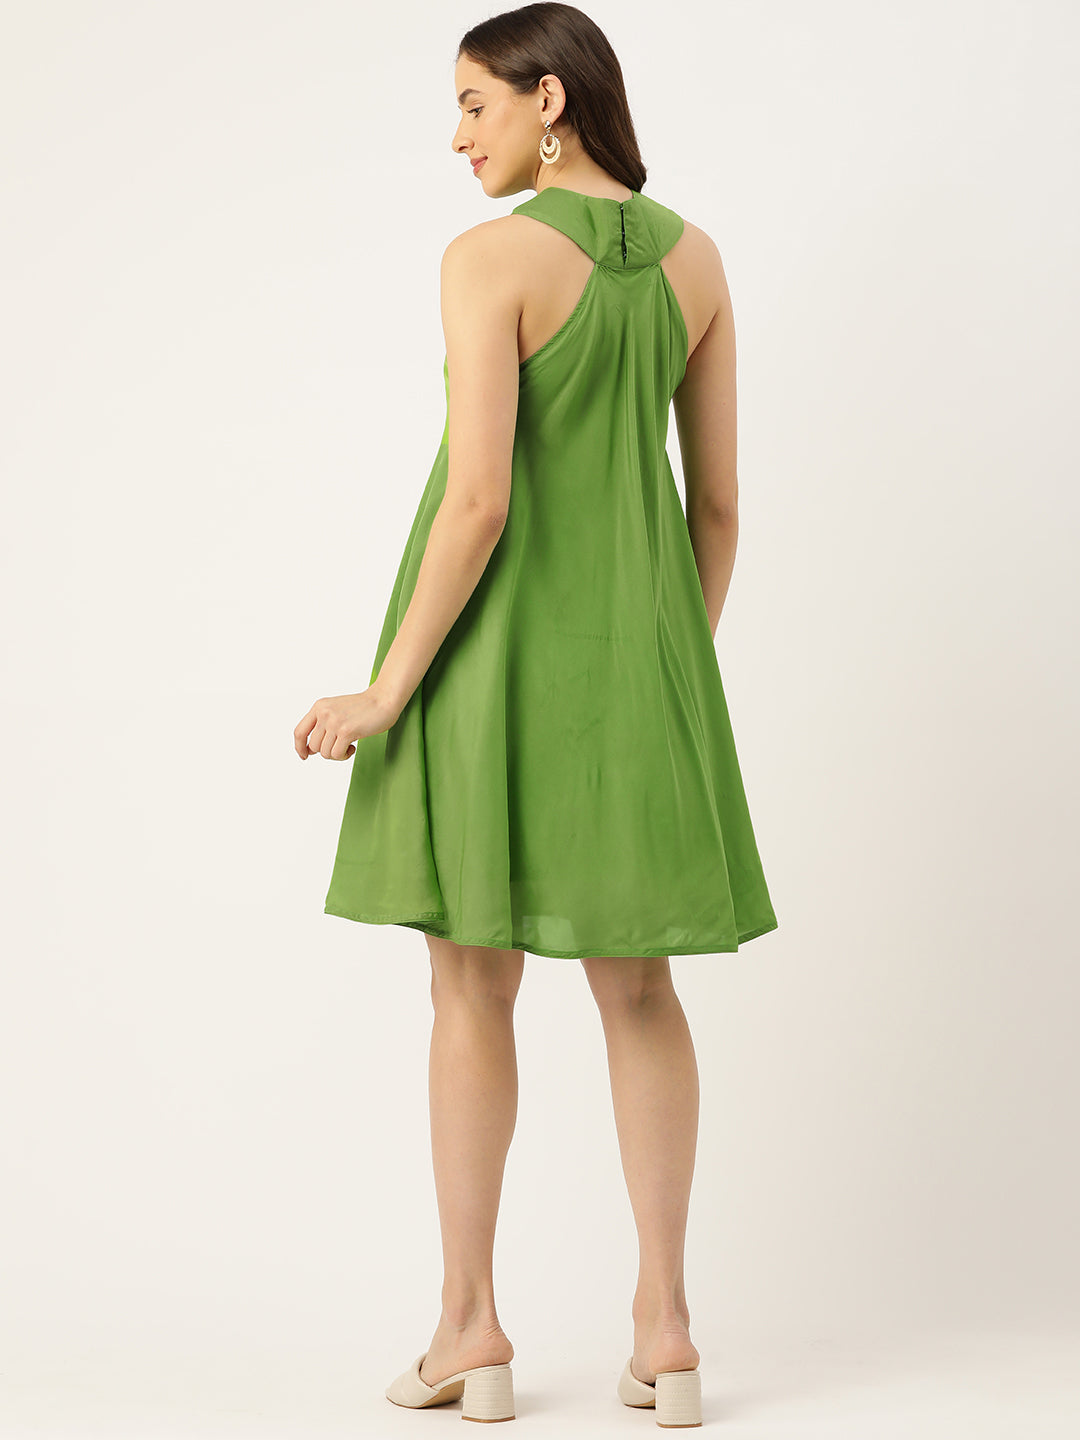 Designer Green Chiffon Dress